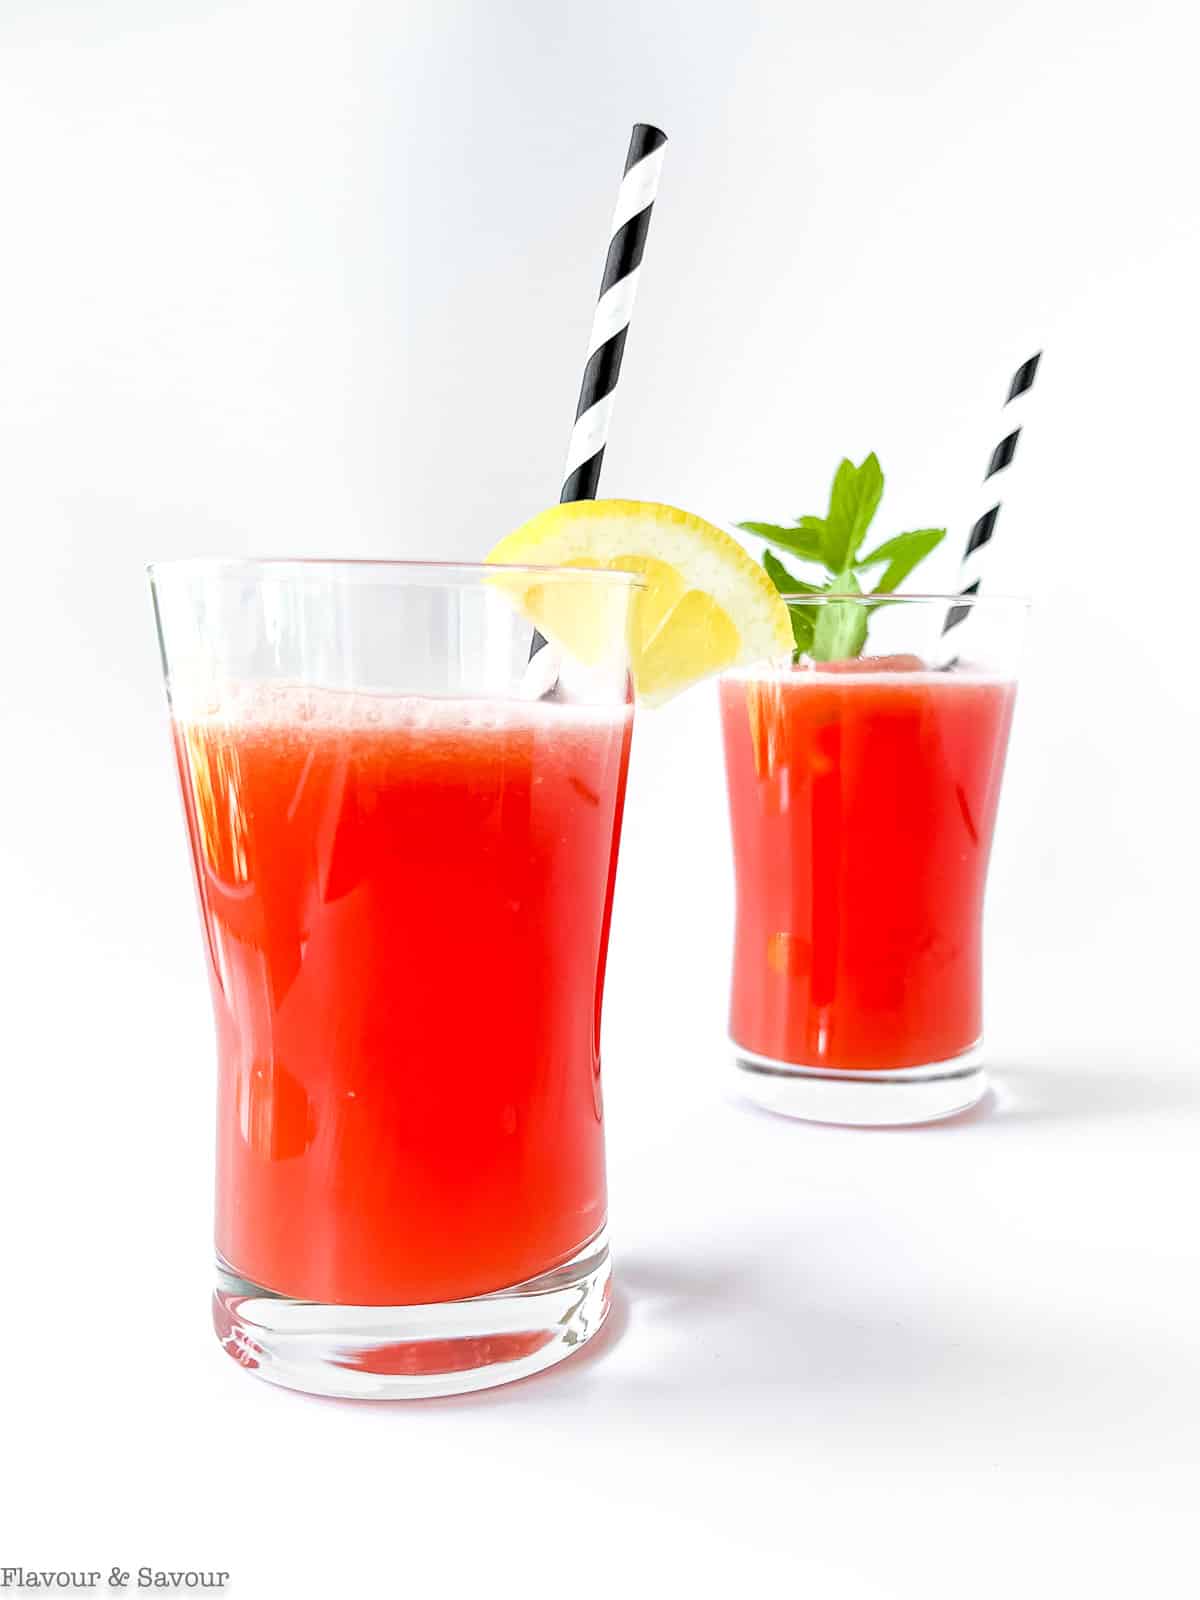 Two glasses of sugar-free watermelon lemonade with straws.